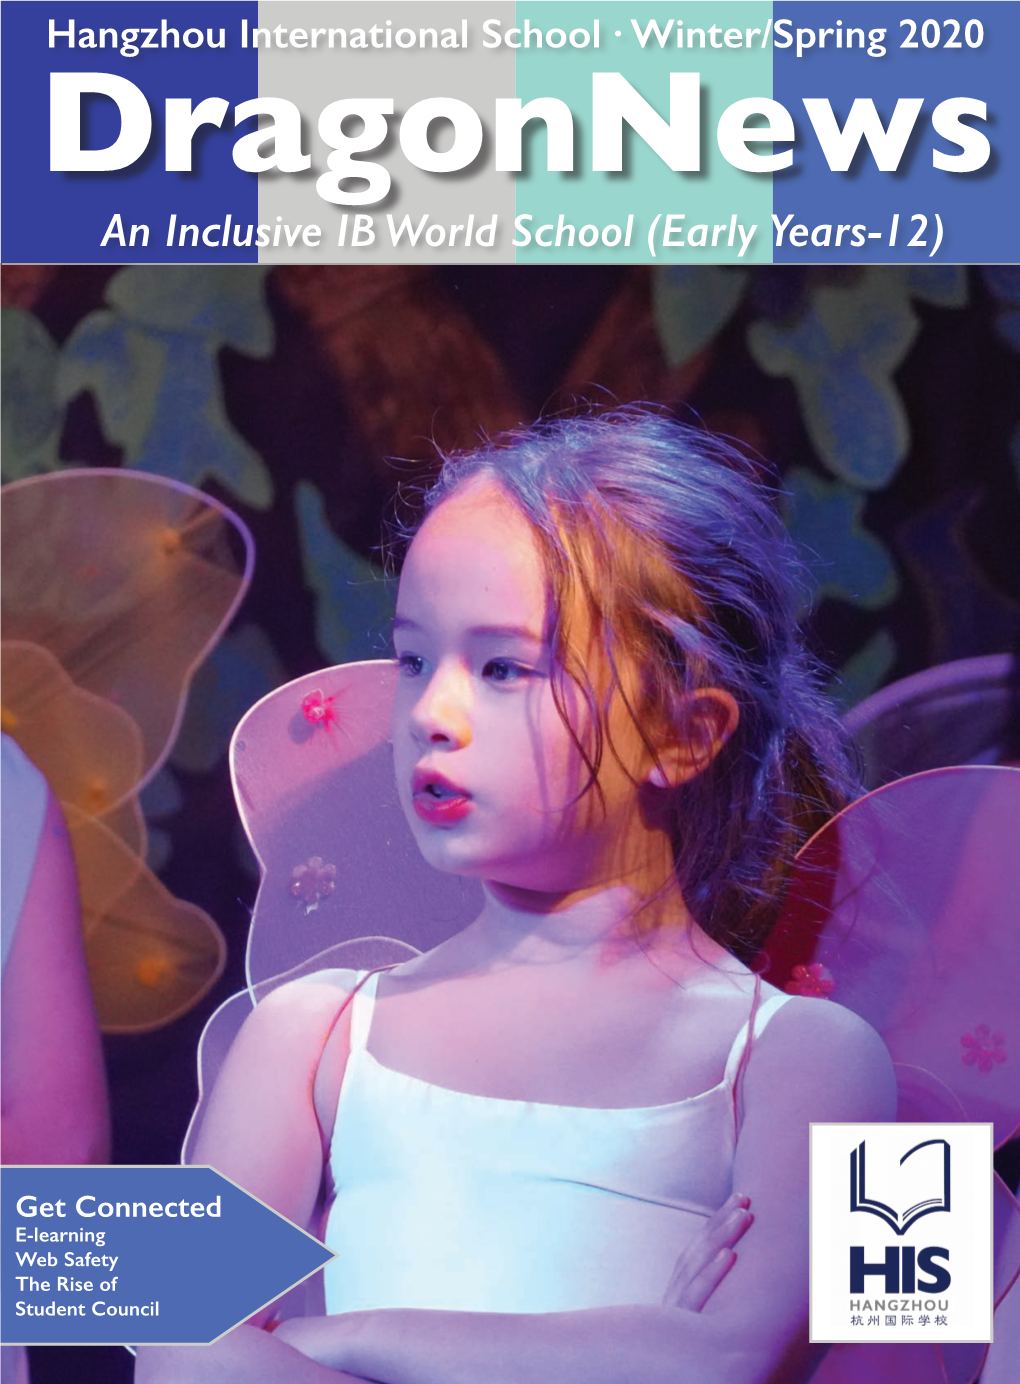 An Inclusive IB World School (Early Years-12)